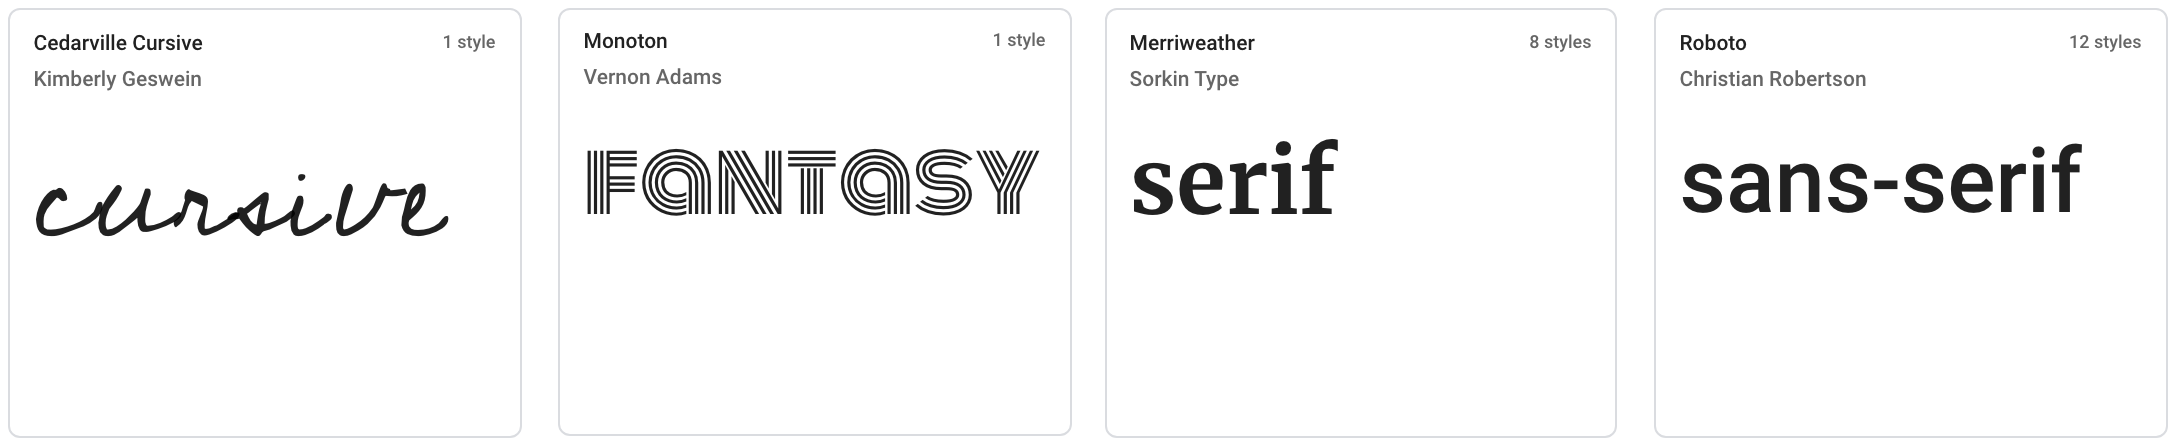 Screenshot with different font types: cursive/script, decorative/fantasy, serif, and sans-serif